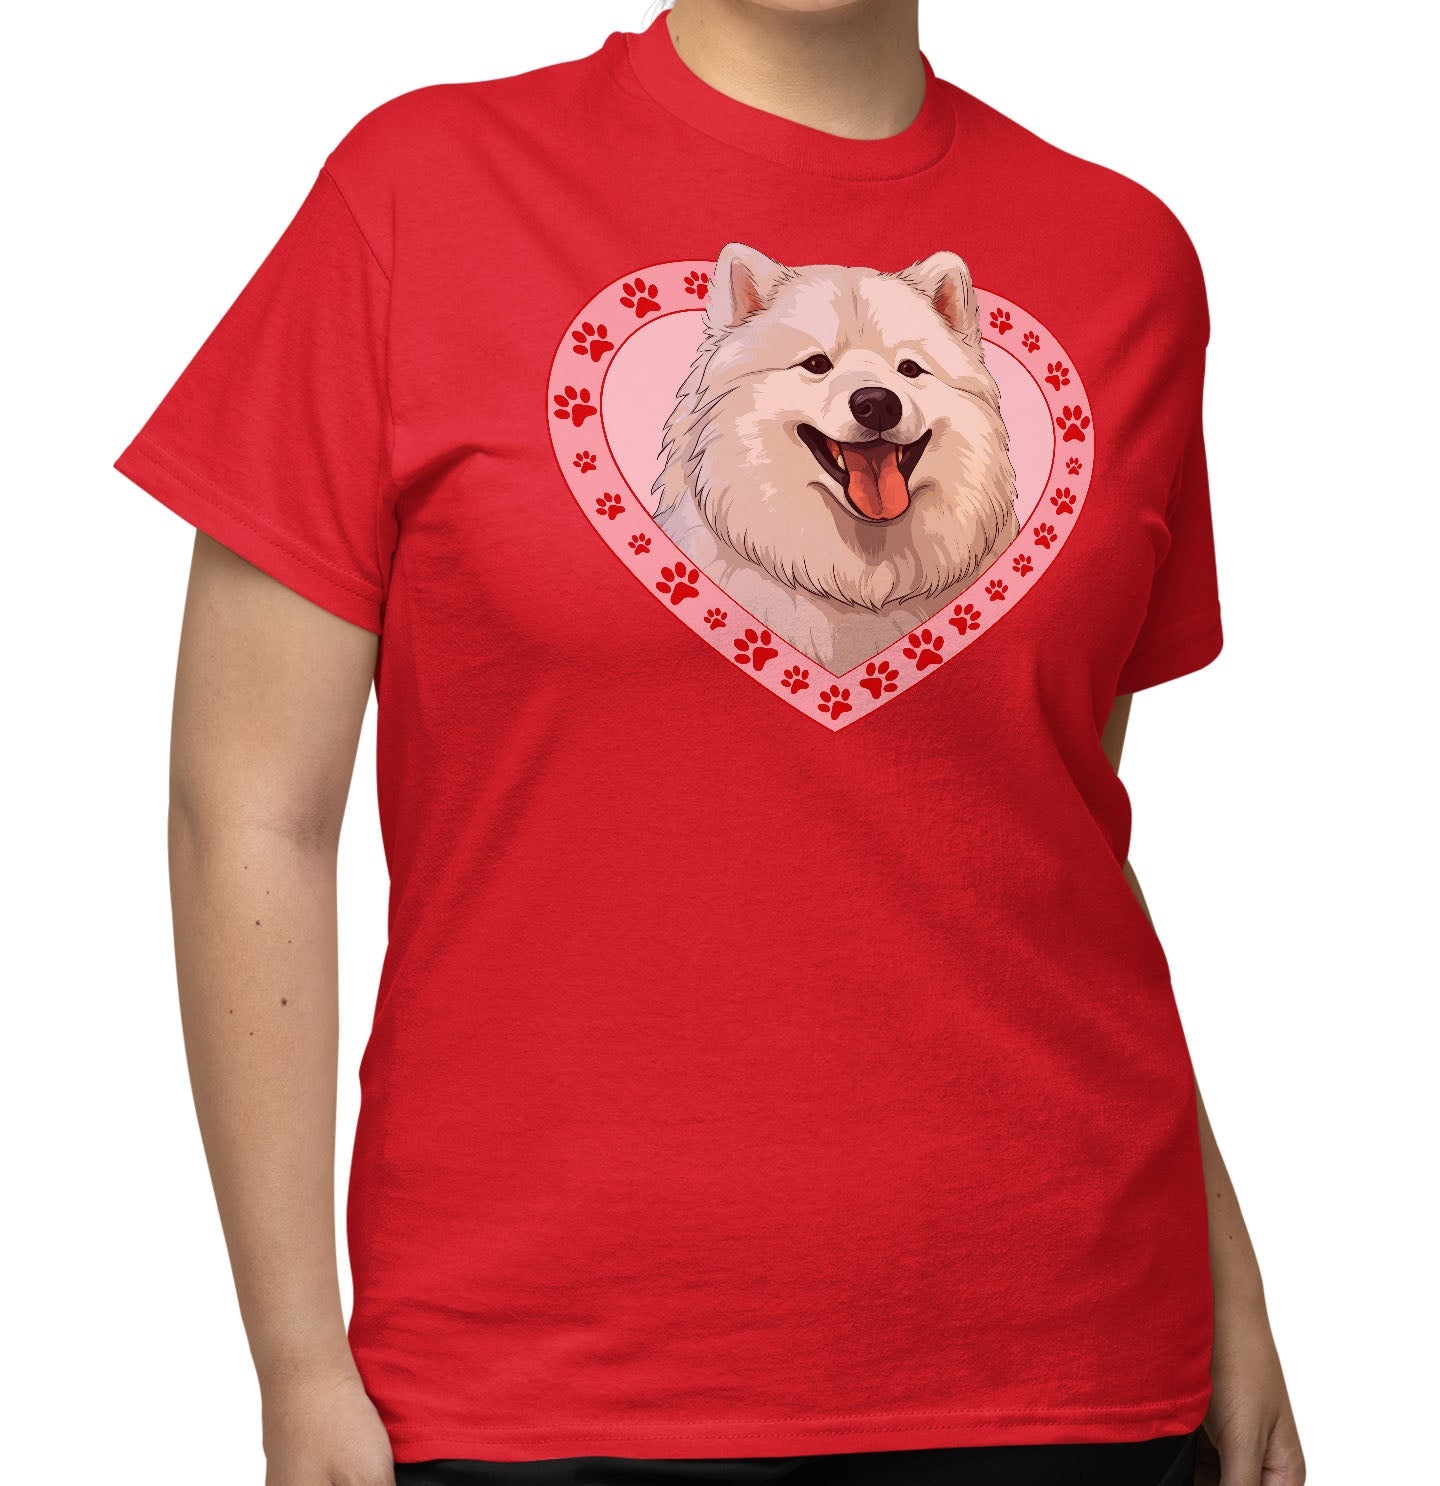 Samoyed Illustration In Heart - Adult Unisex T-Shirt